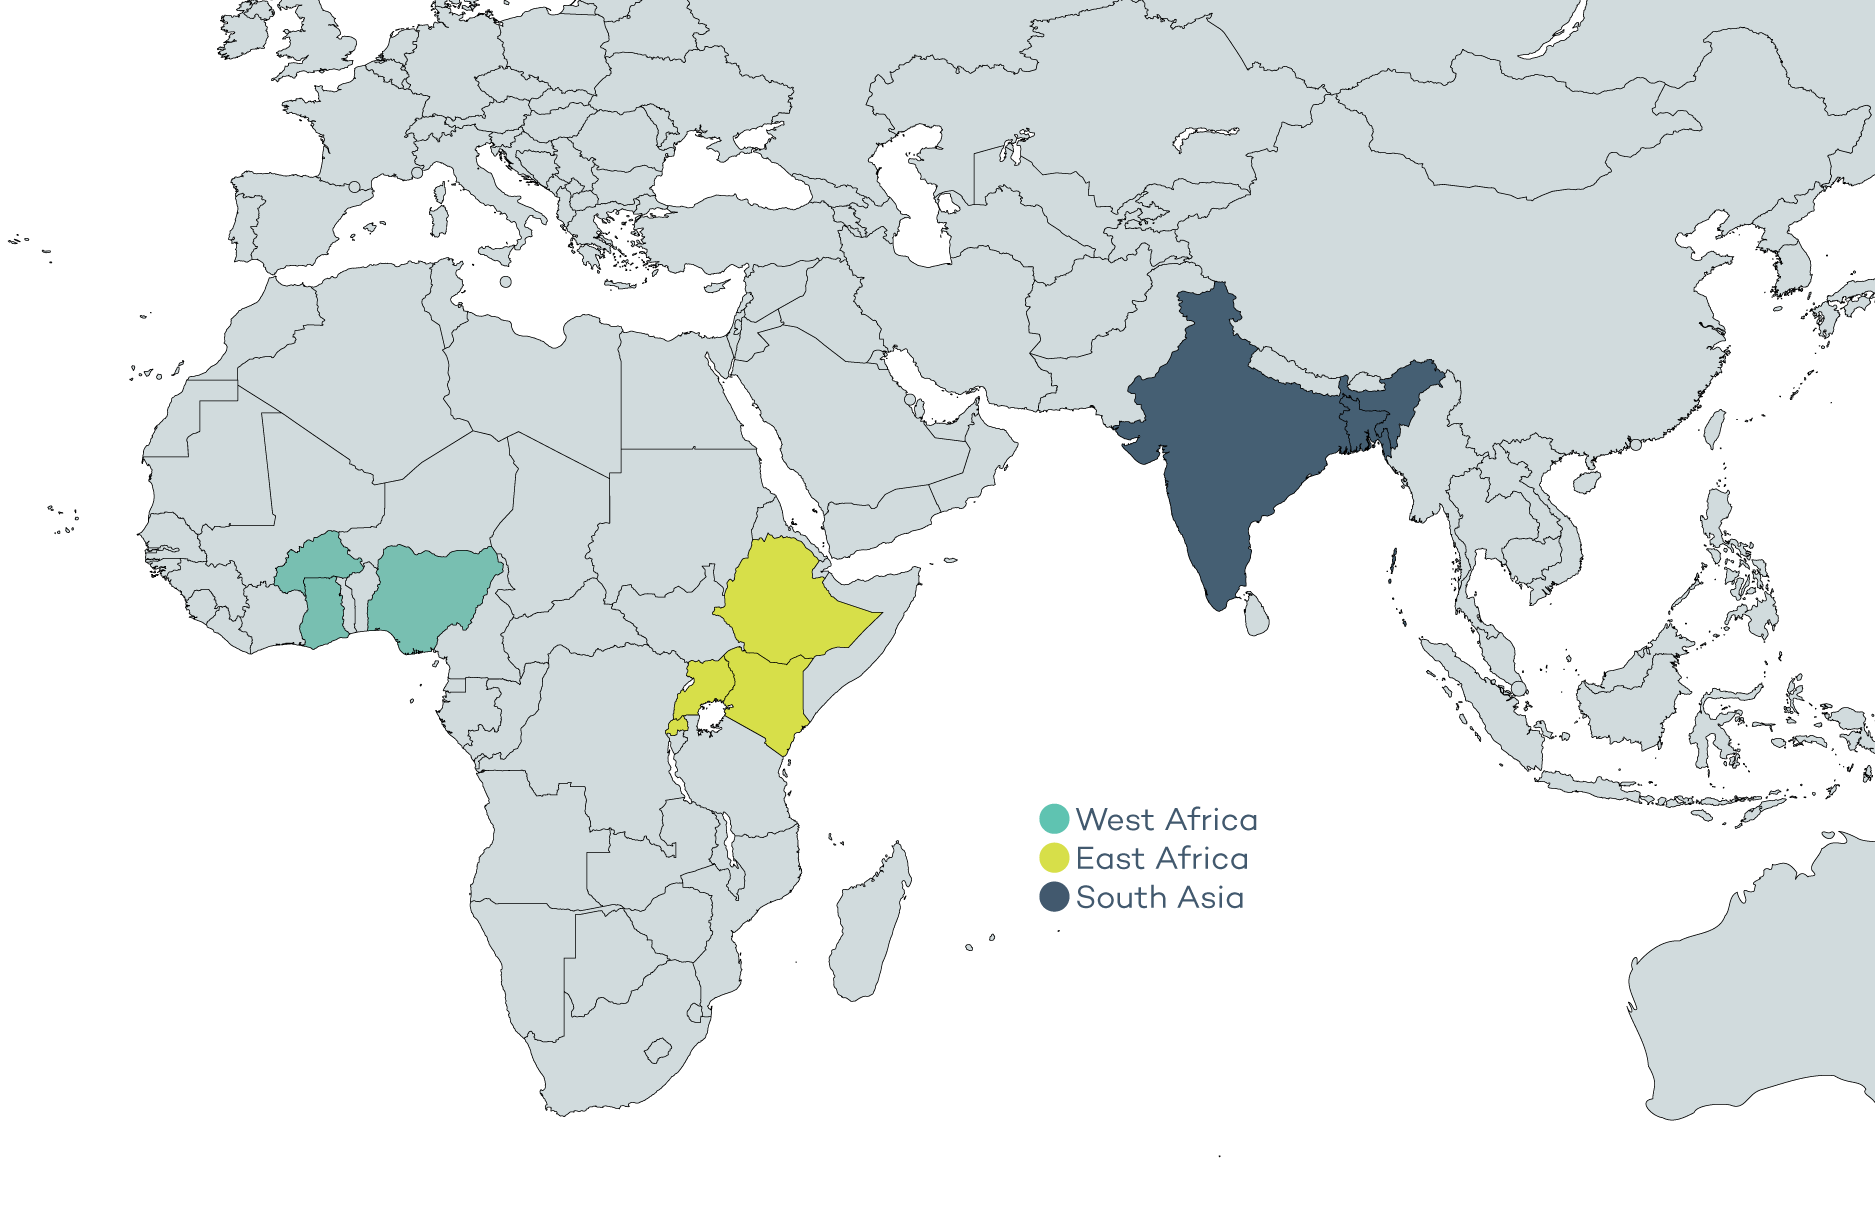 A map showing the following countries indicated: Burkina Faso, Ethiopia, Ghana, Kenya, Nigeria, Rwanda, Uganda, India, and Bangladesh